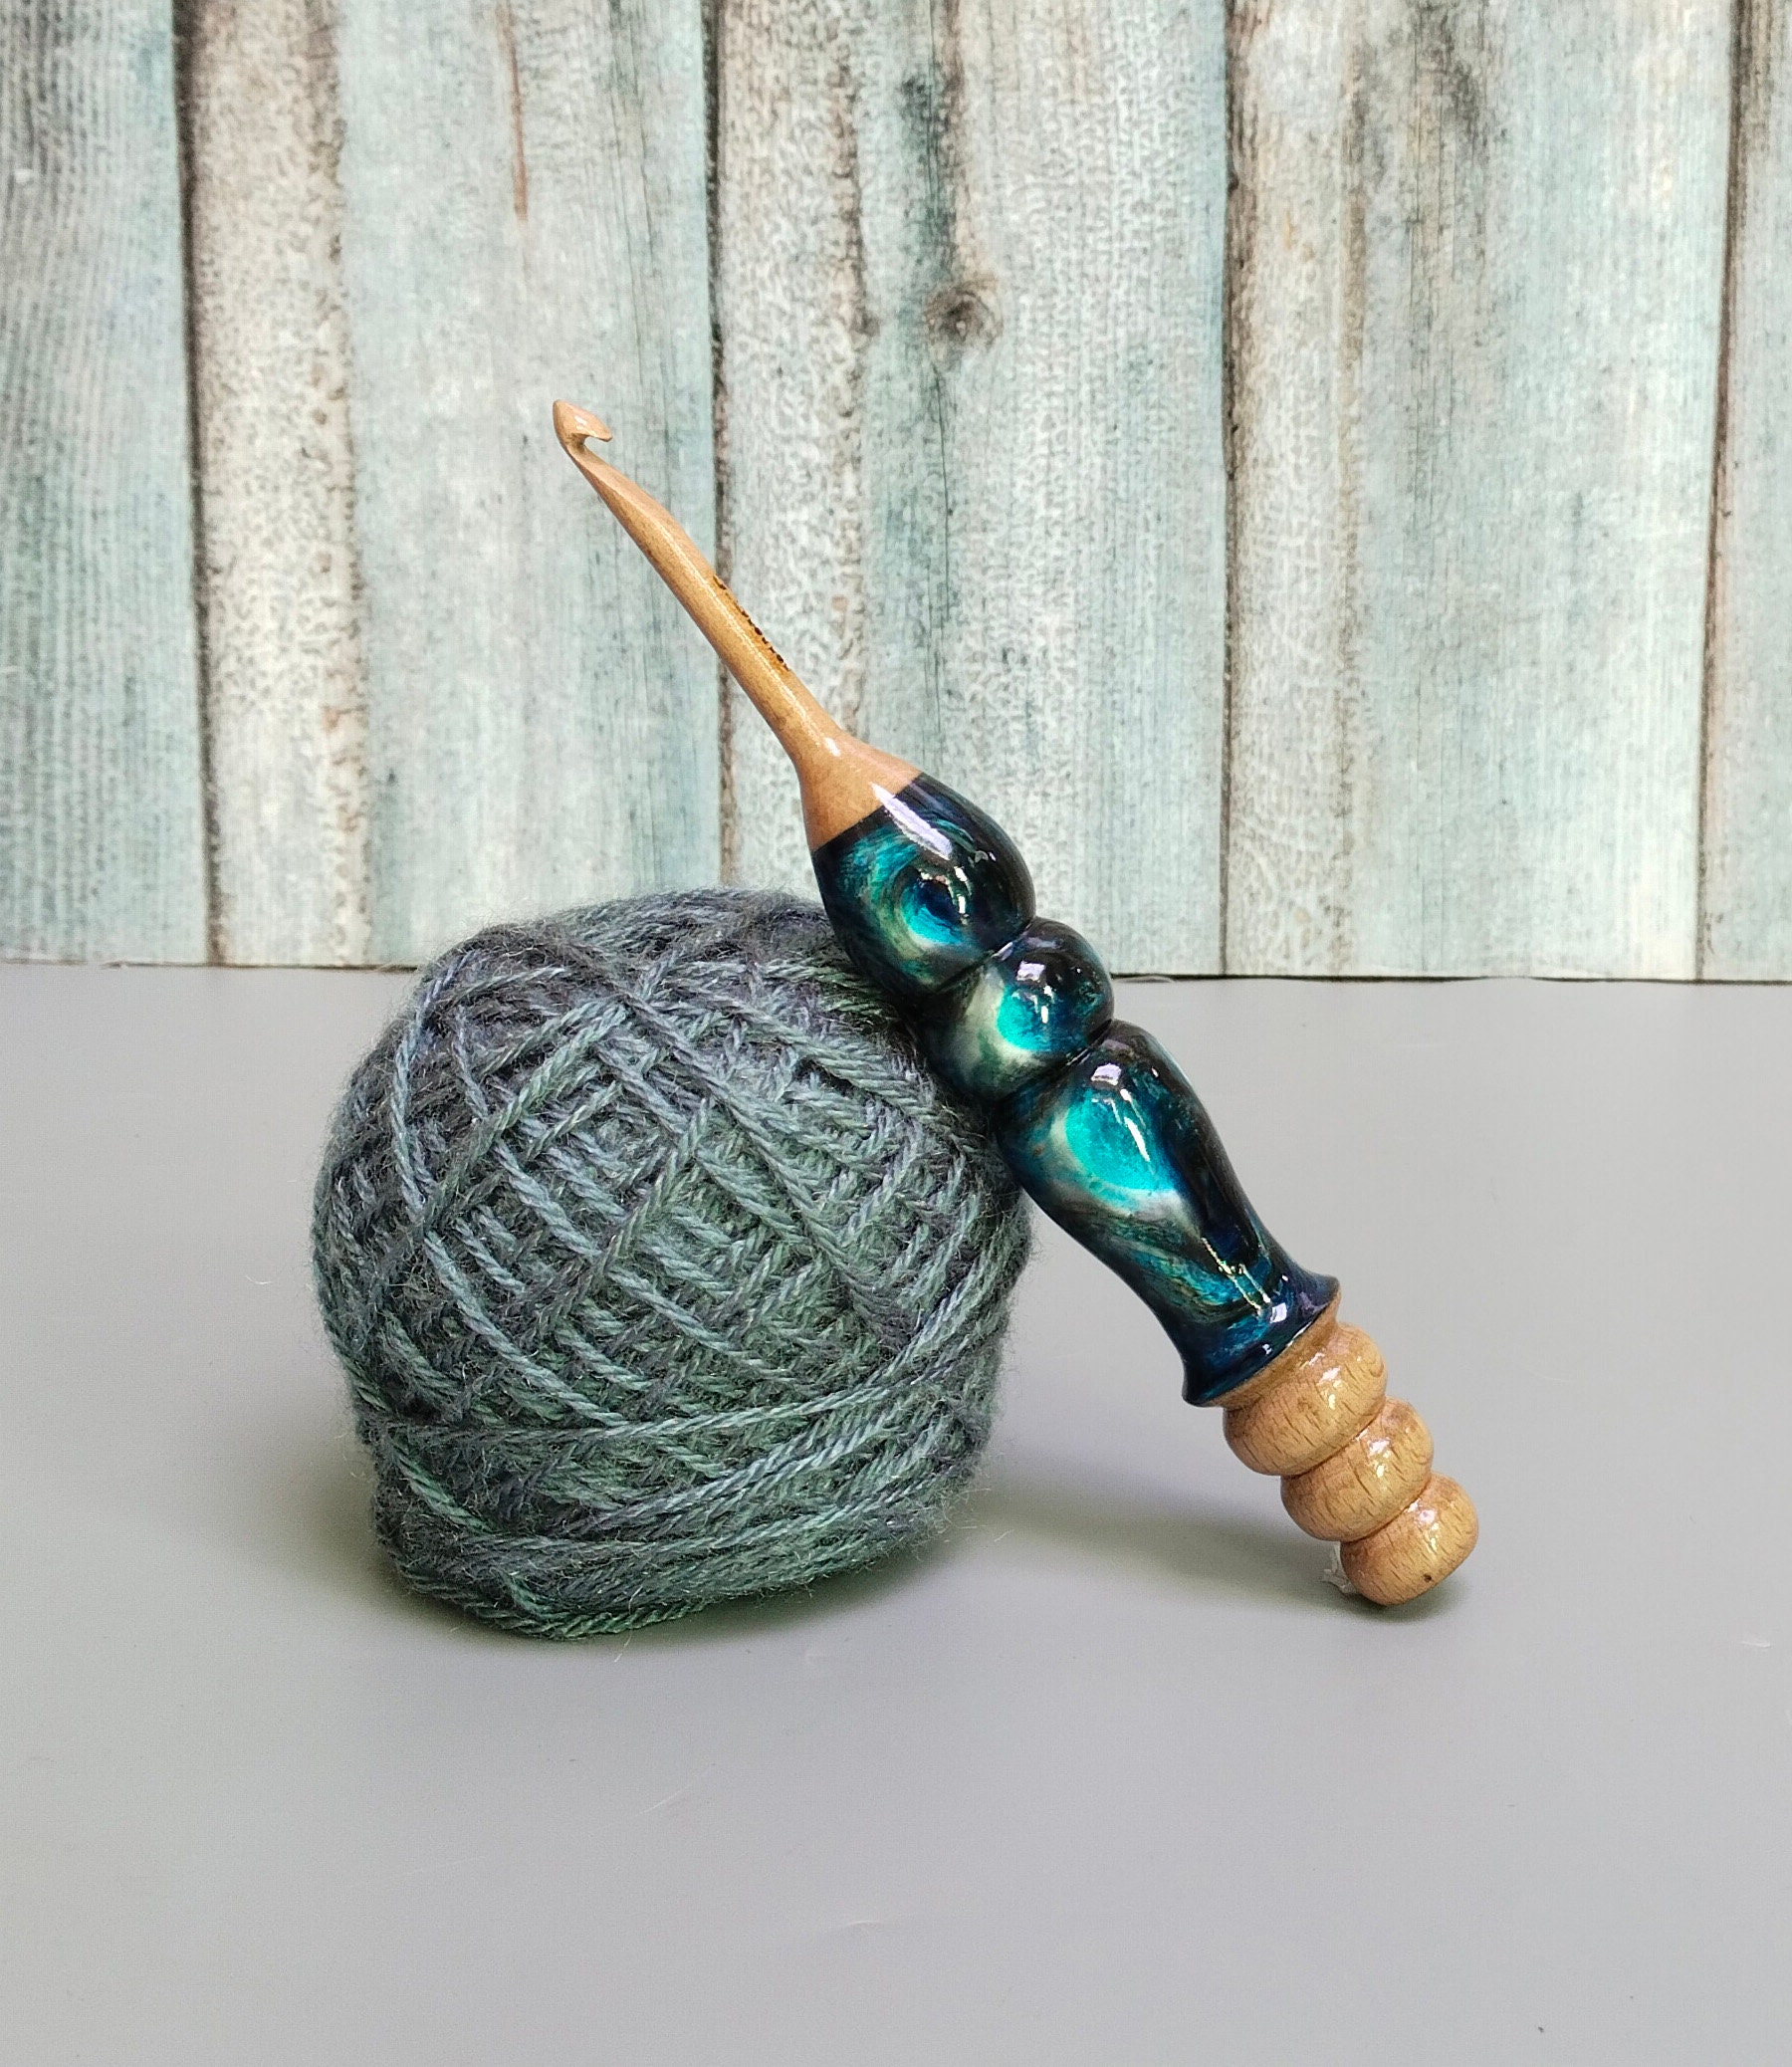  Crochet Counting Hook & Handle Set - 12 Hooks 2mm-8mm